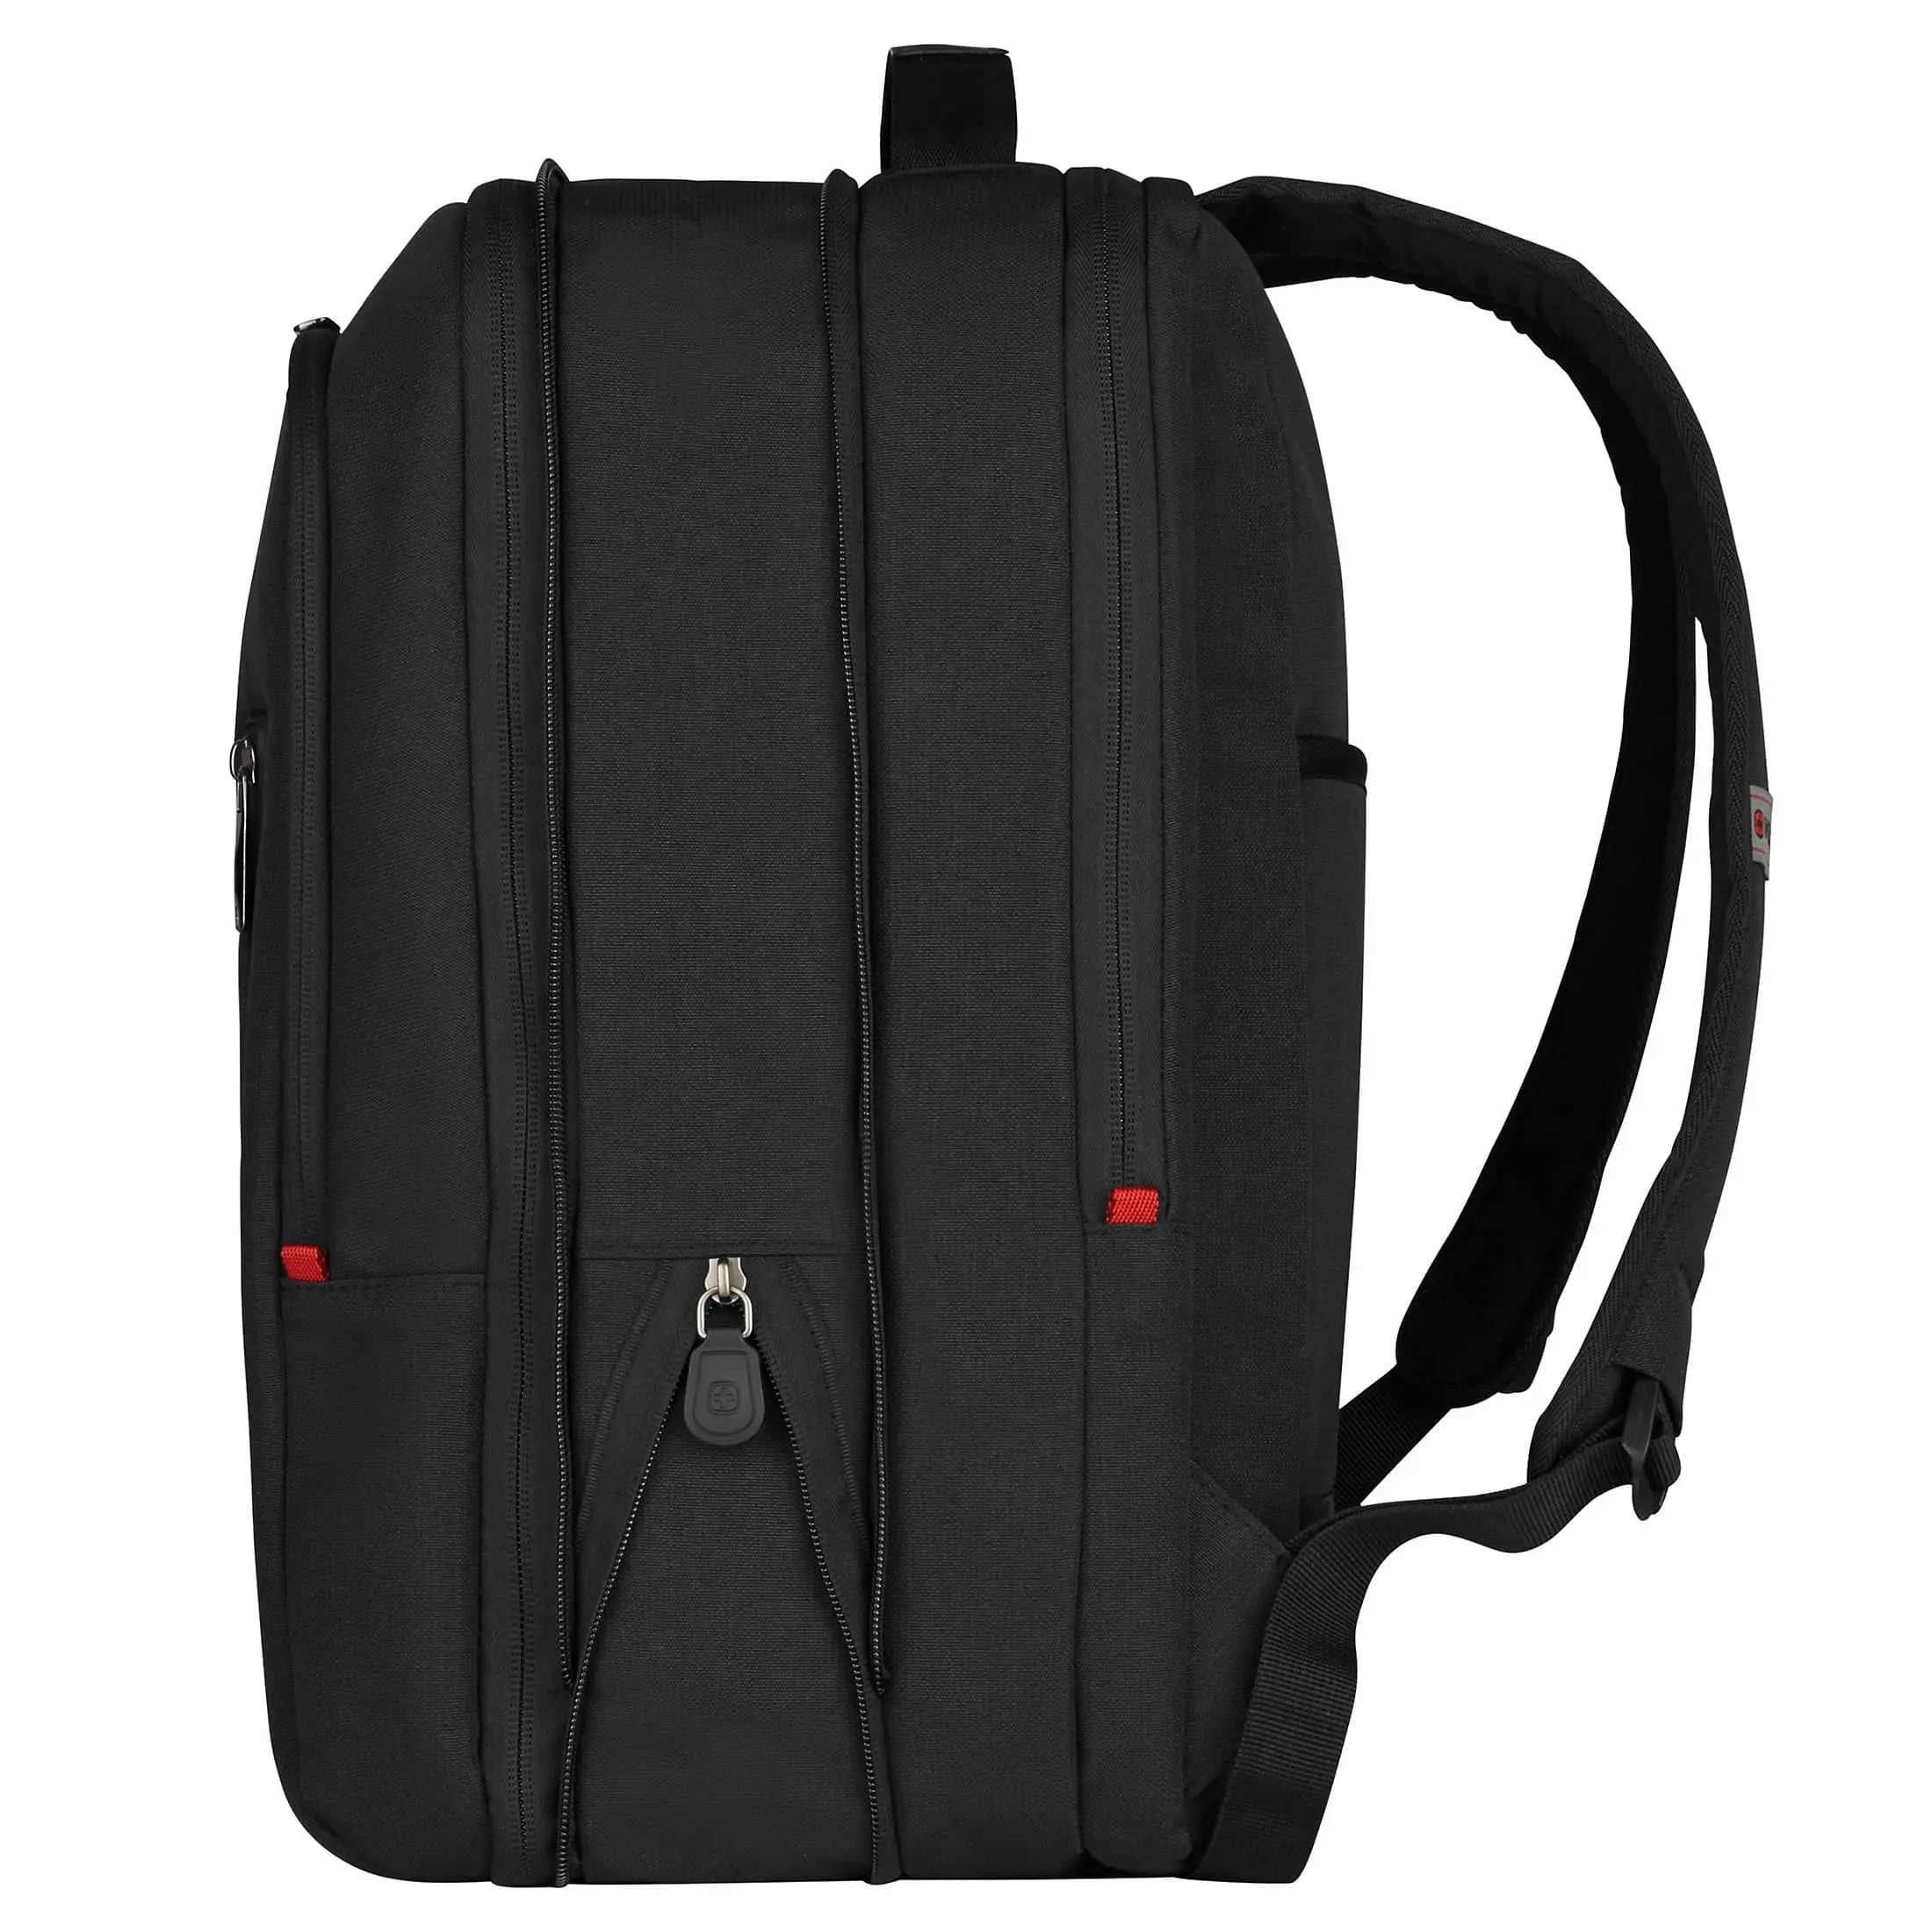 Wenger Business City Traveler Laptop Backpack 42 cm - Black